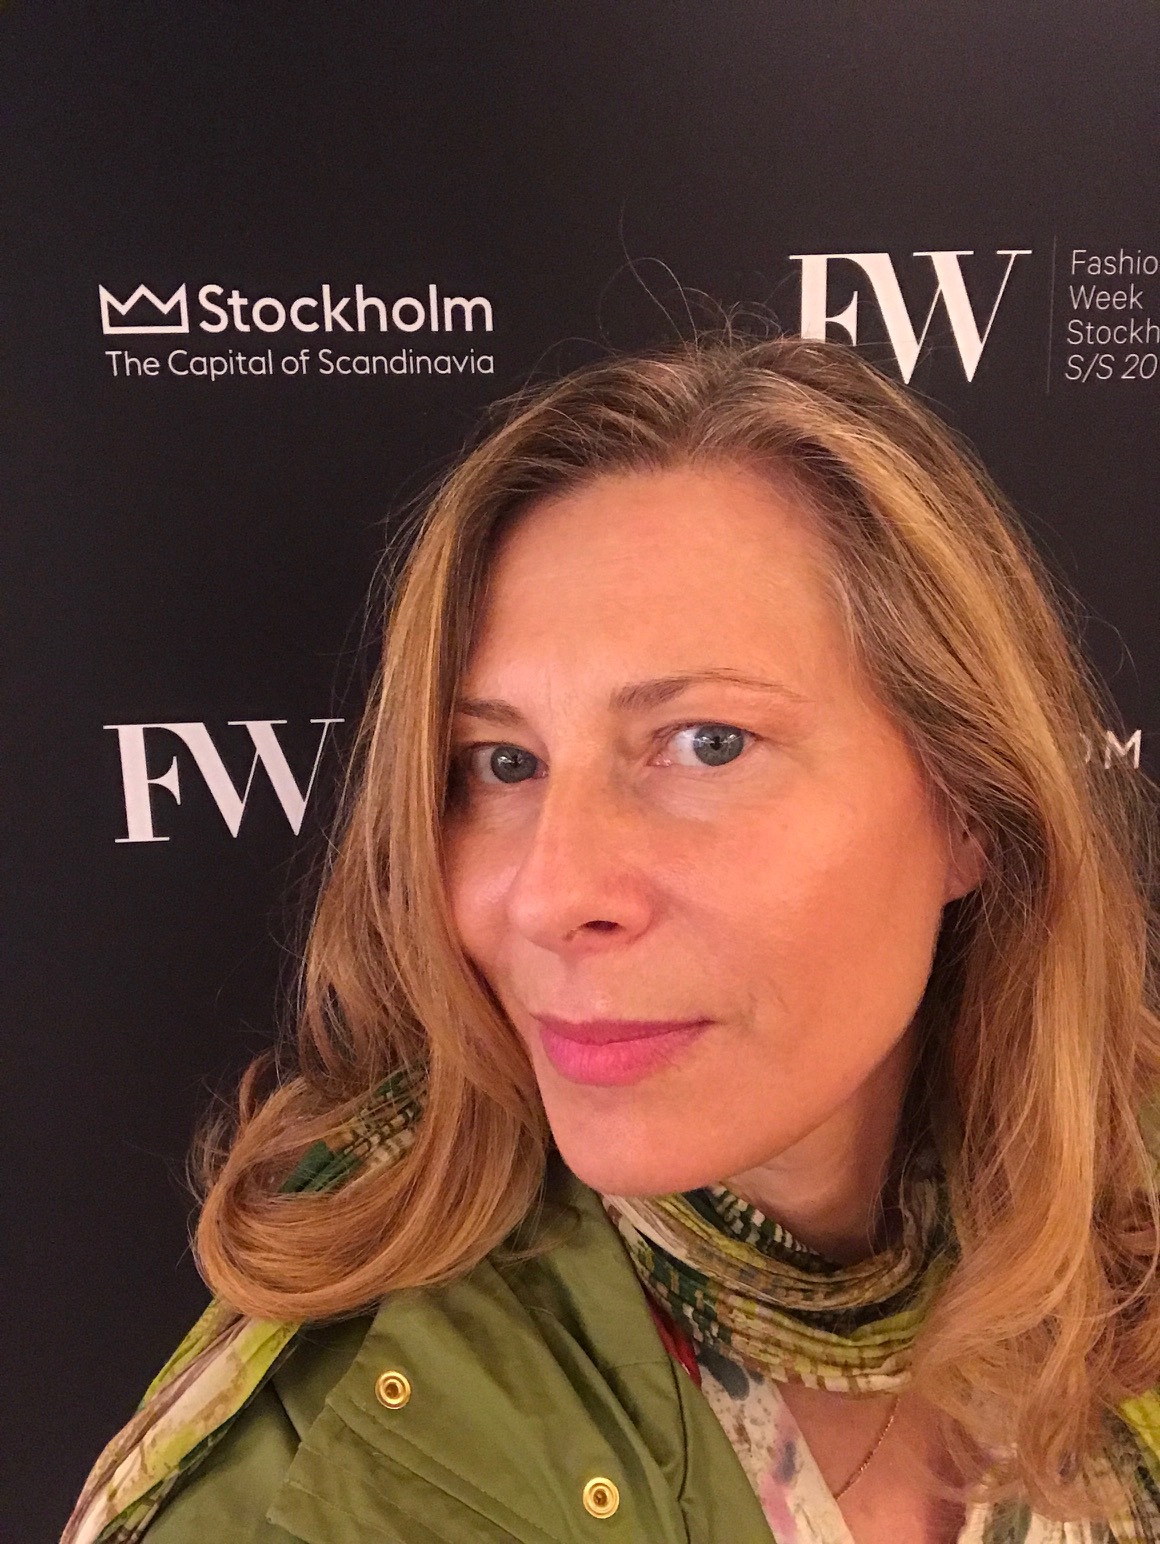 Fashion Week Stockholm, Plats: Grand Hotel. Uppdrag: Testa en Dyson